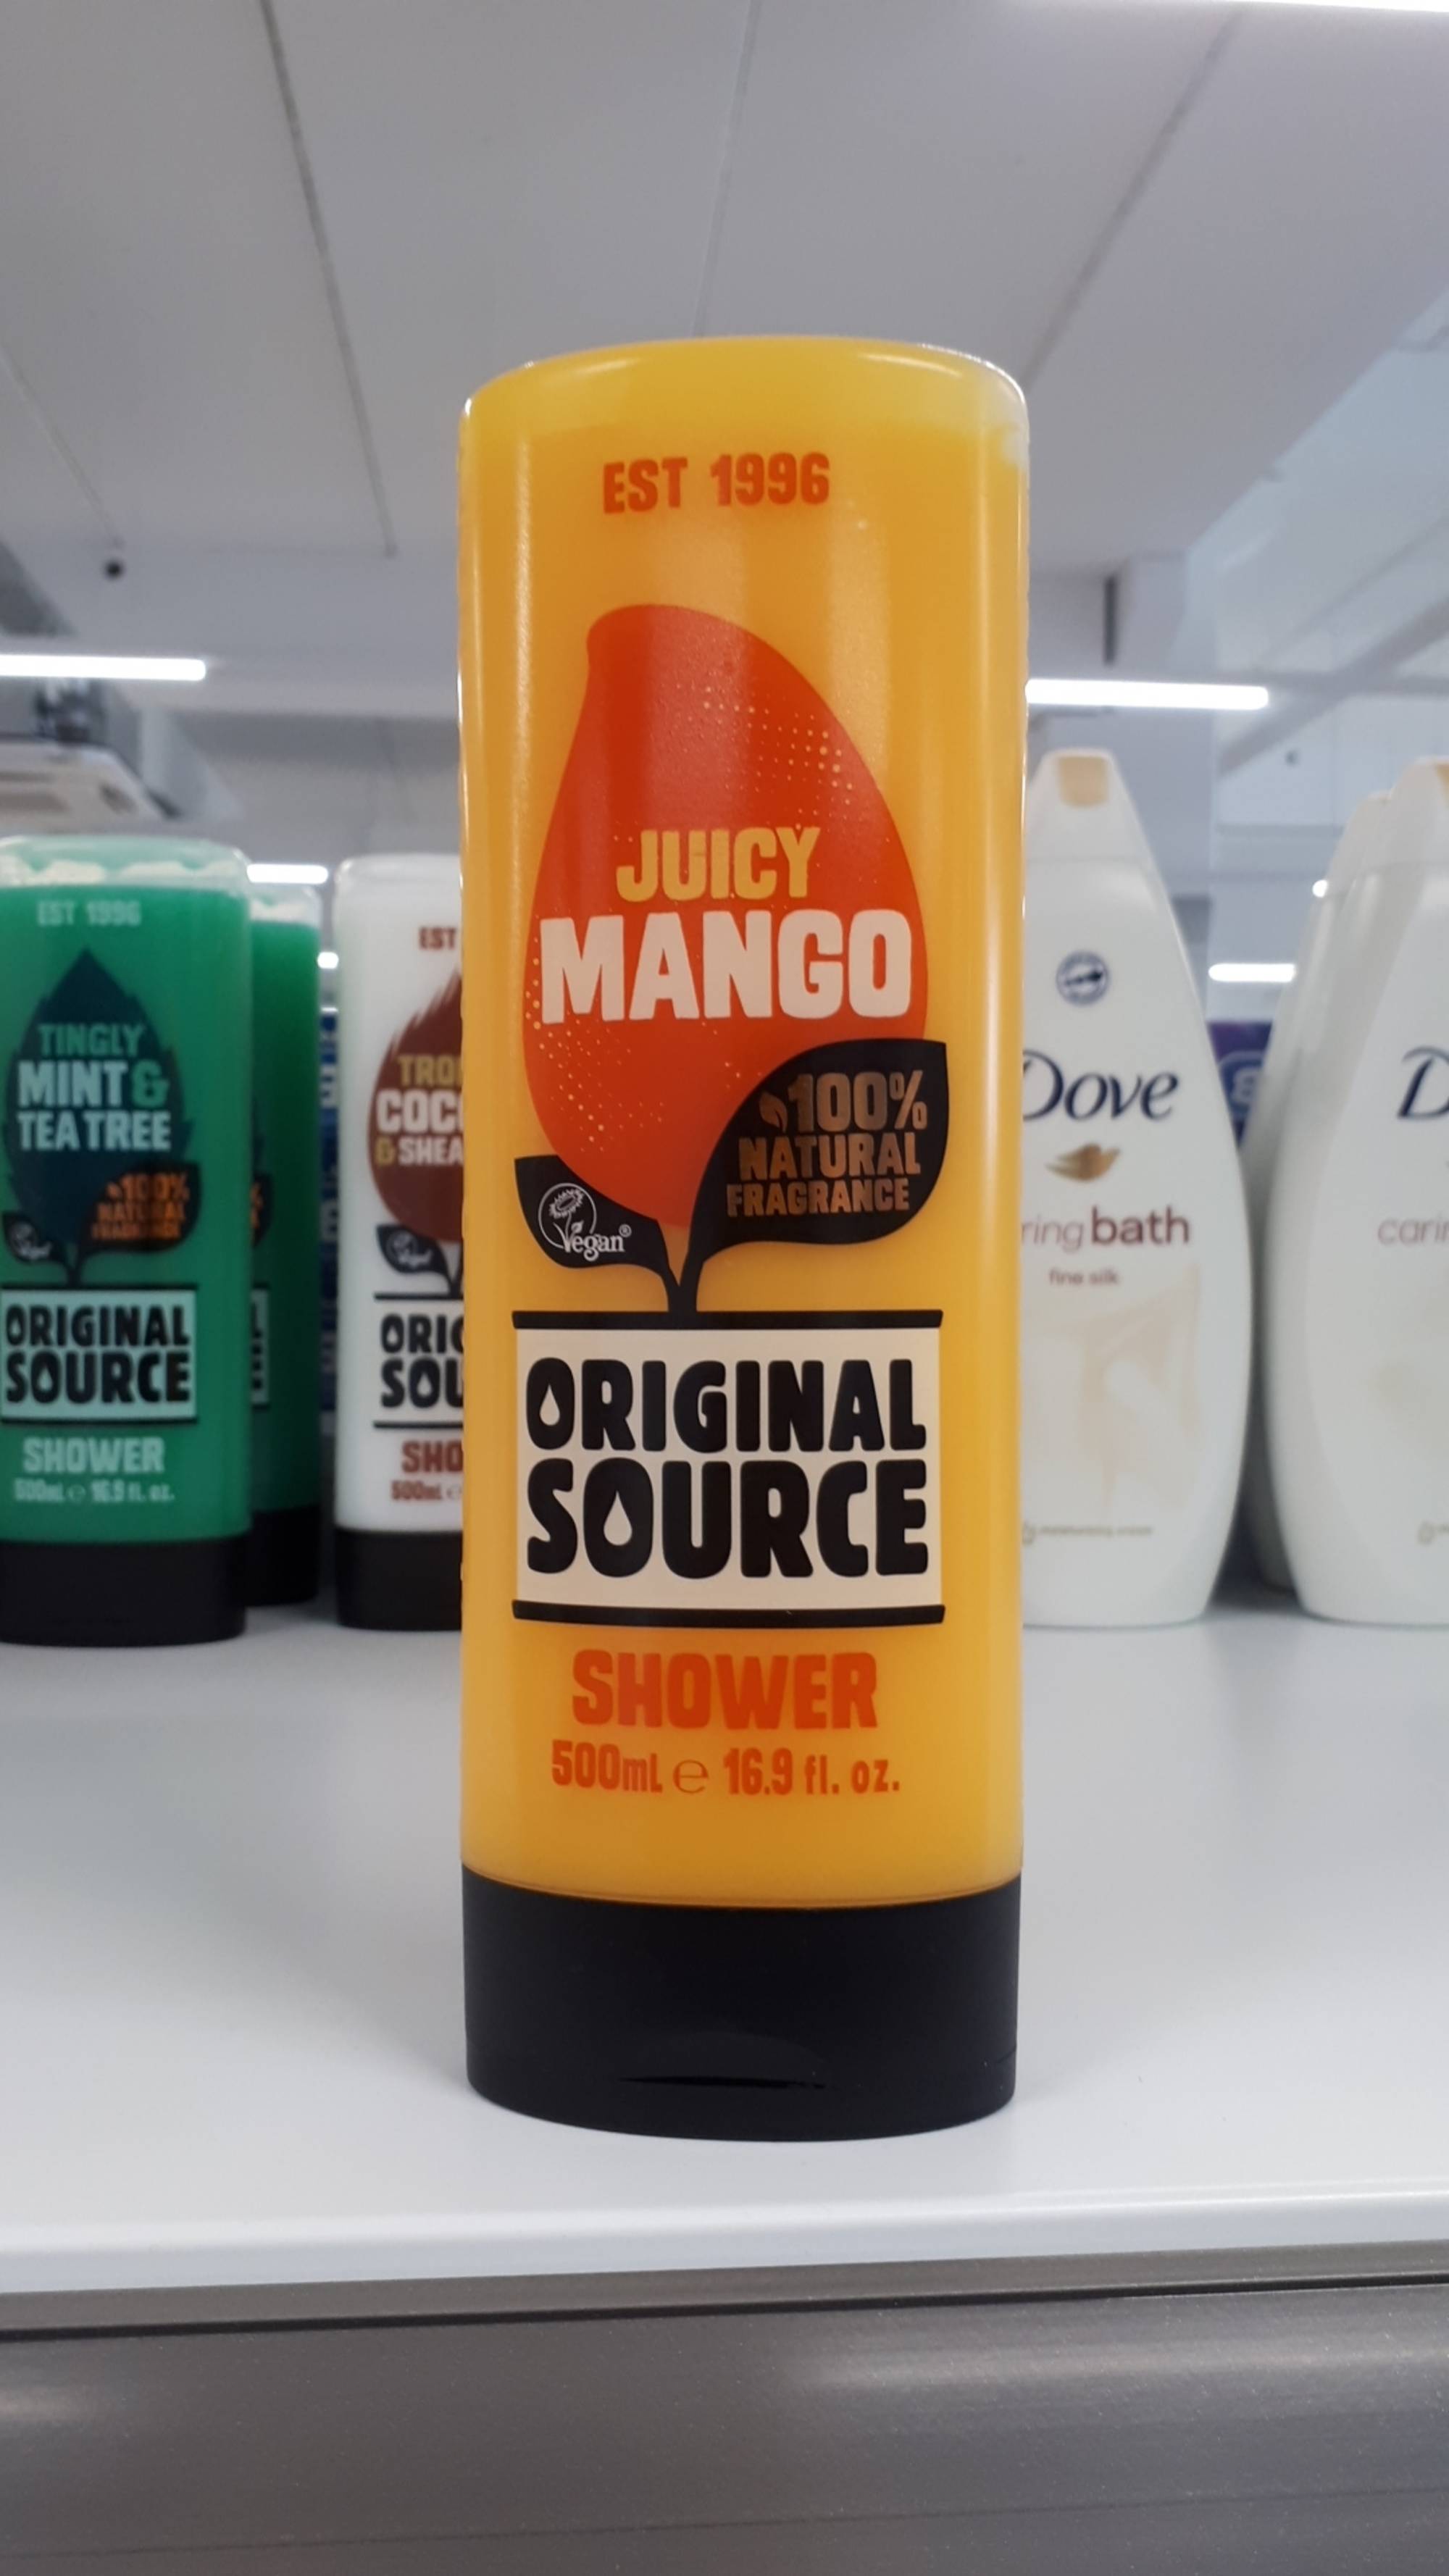 ORIGINAL SOURCE - Juicy mango - Shower